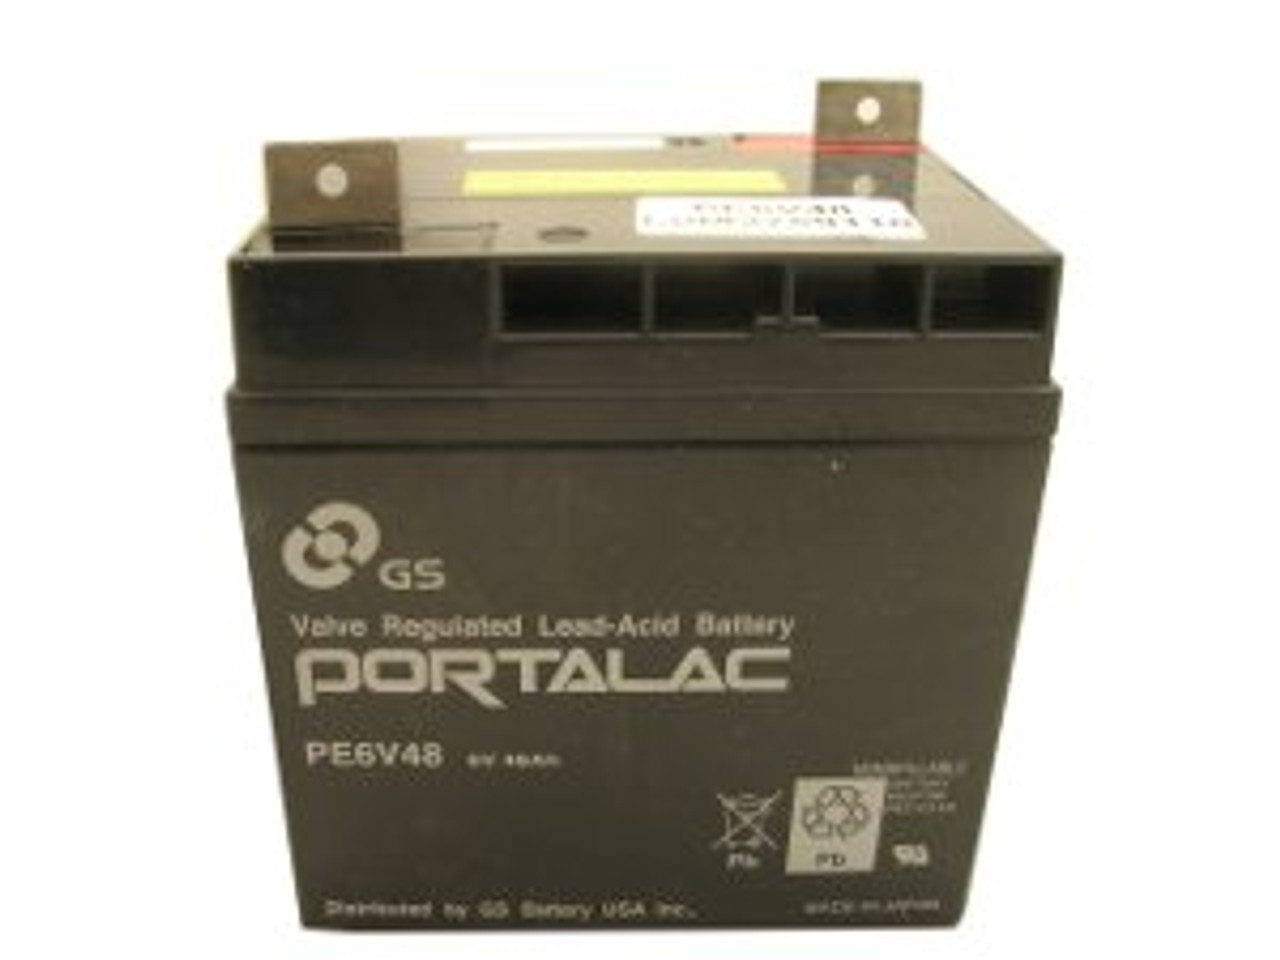 GS Portalac PE6V48 Battery